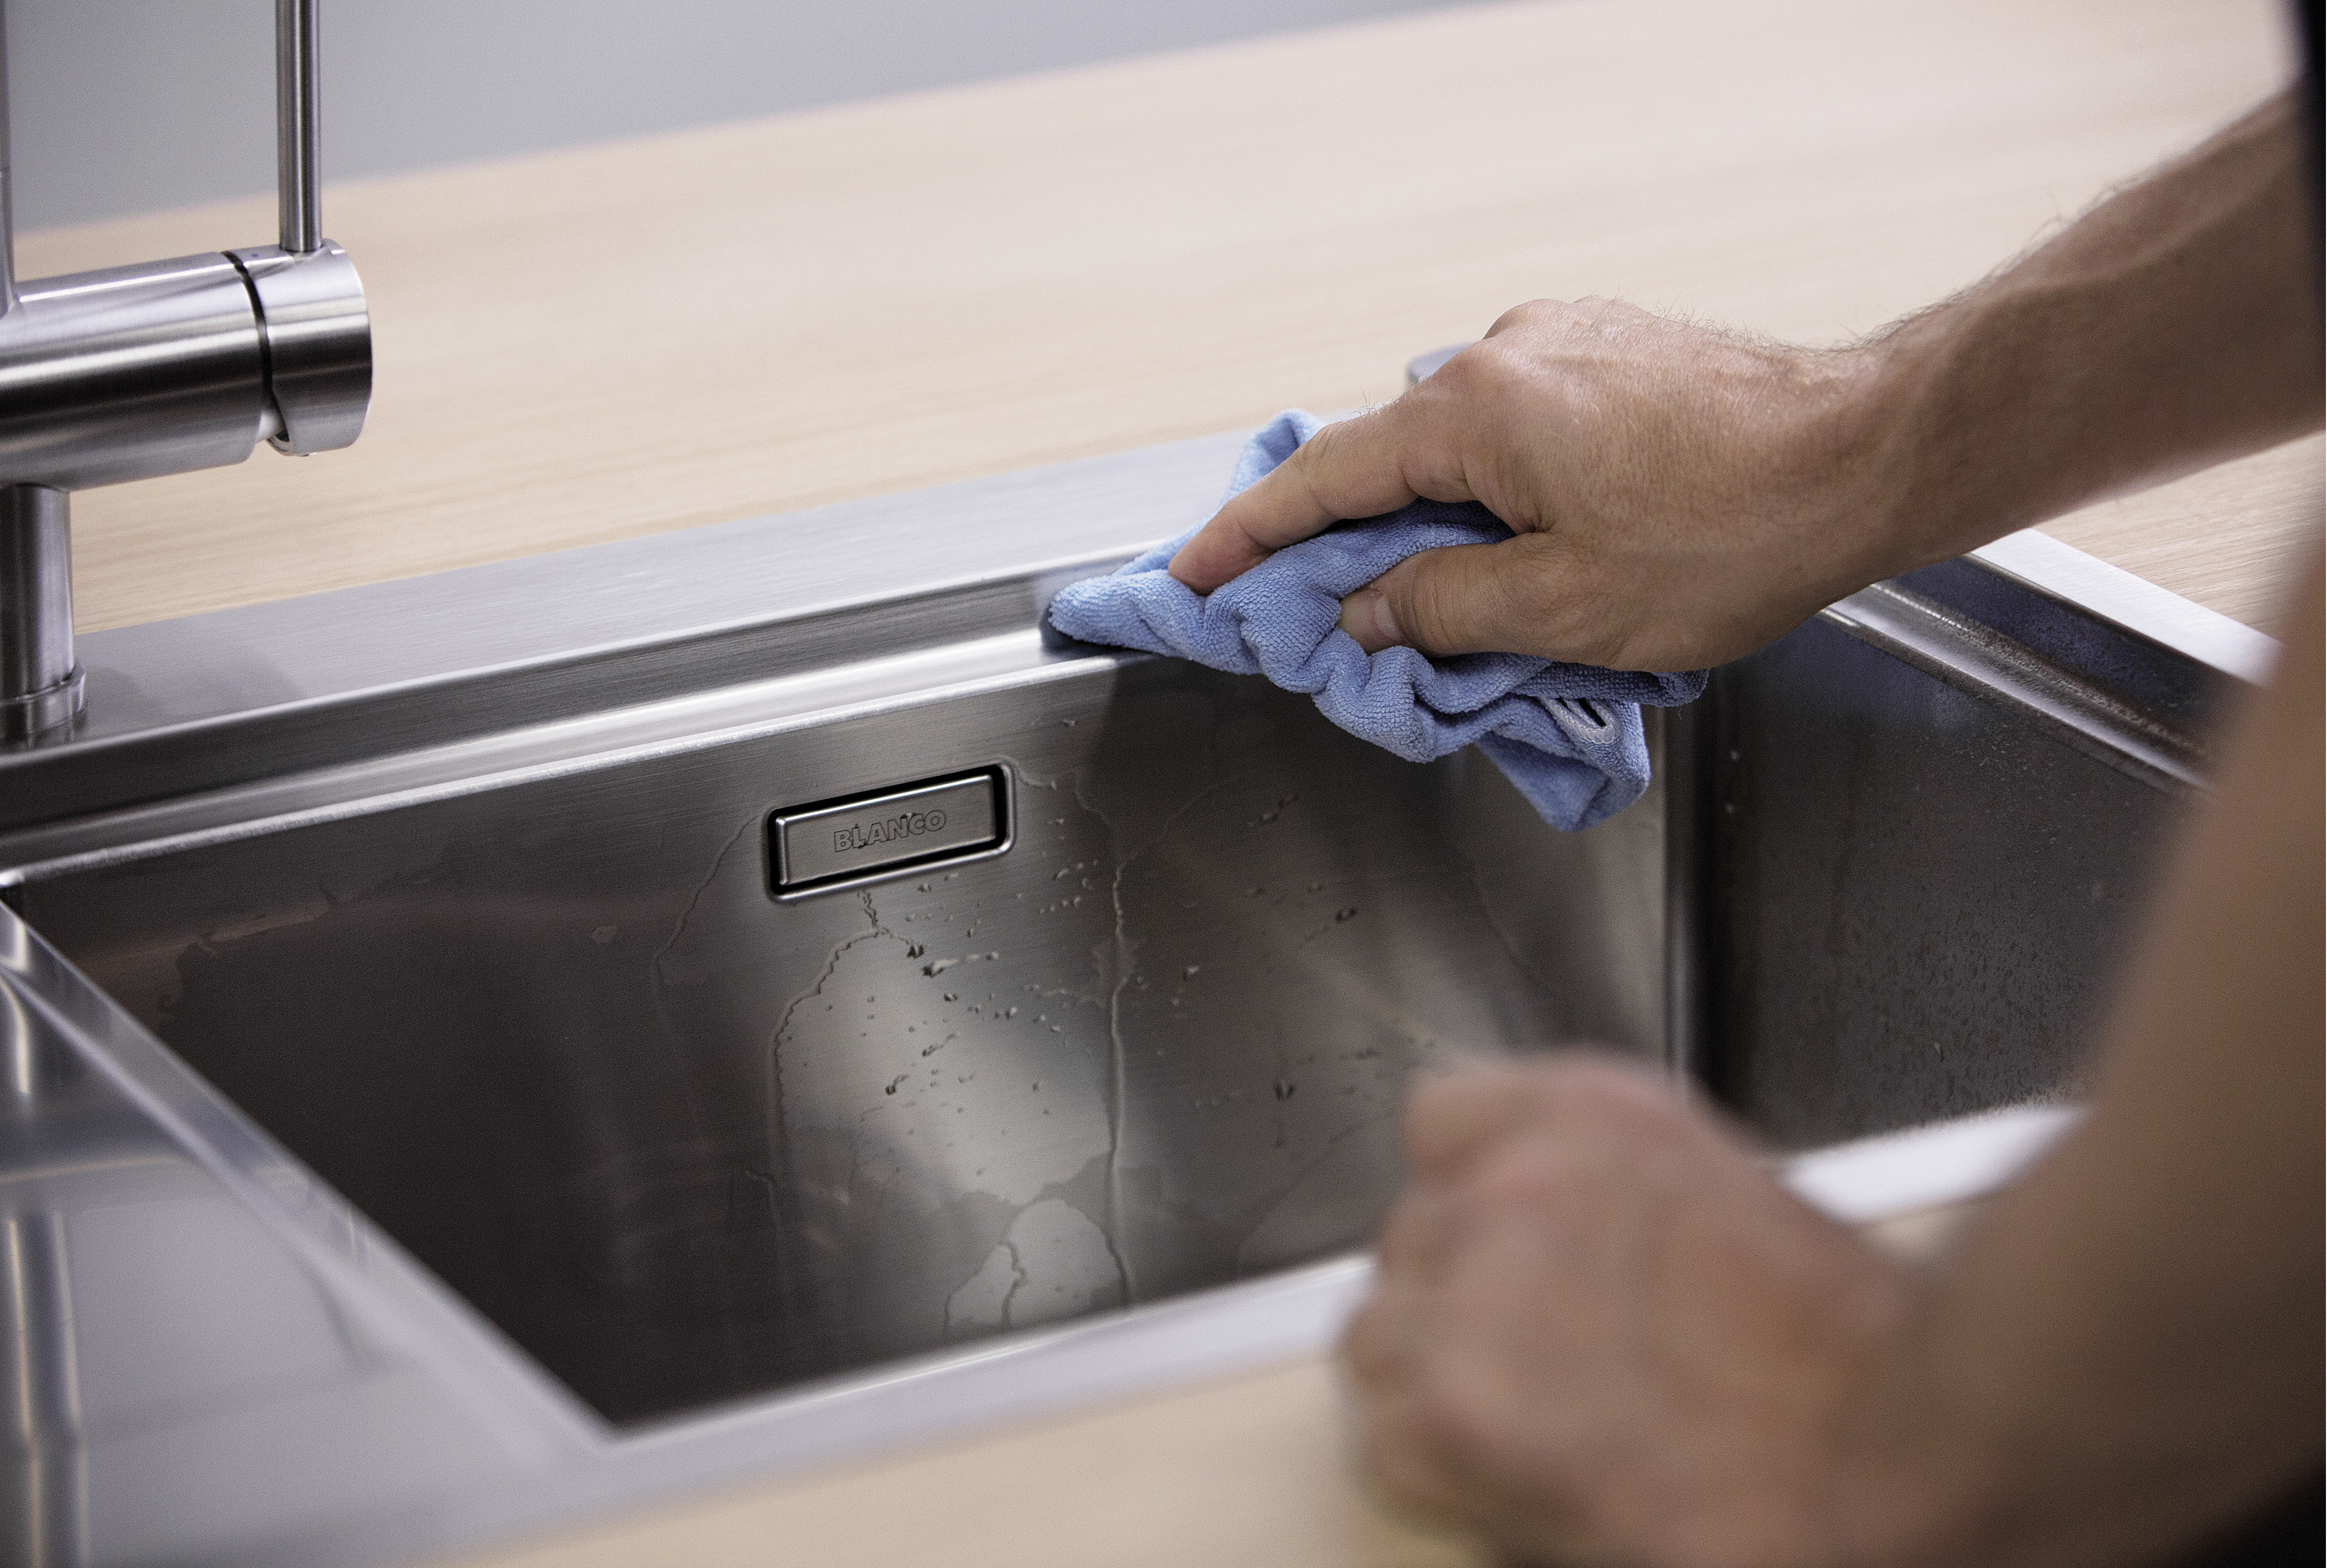 Avoid limescale: rub the sink dry.